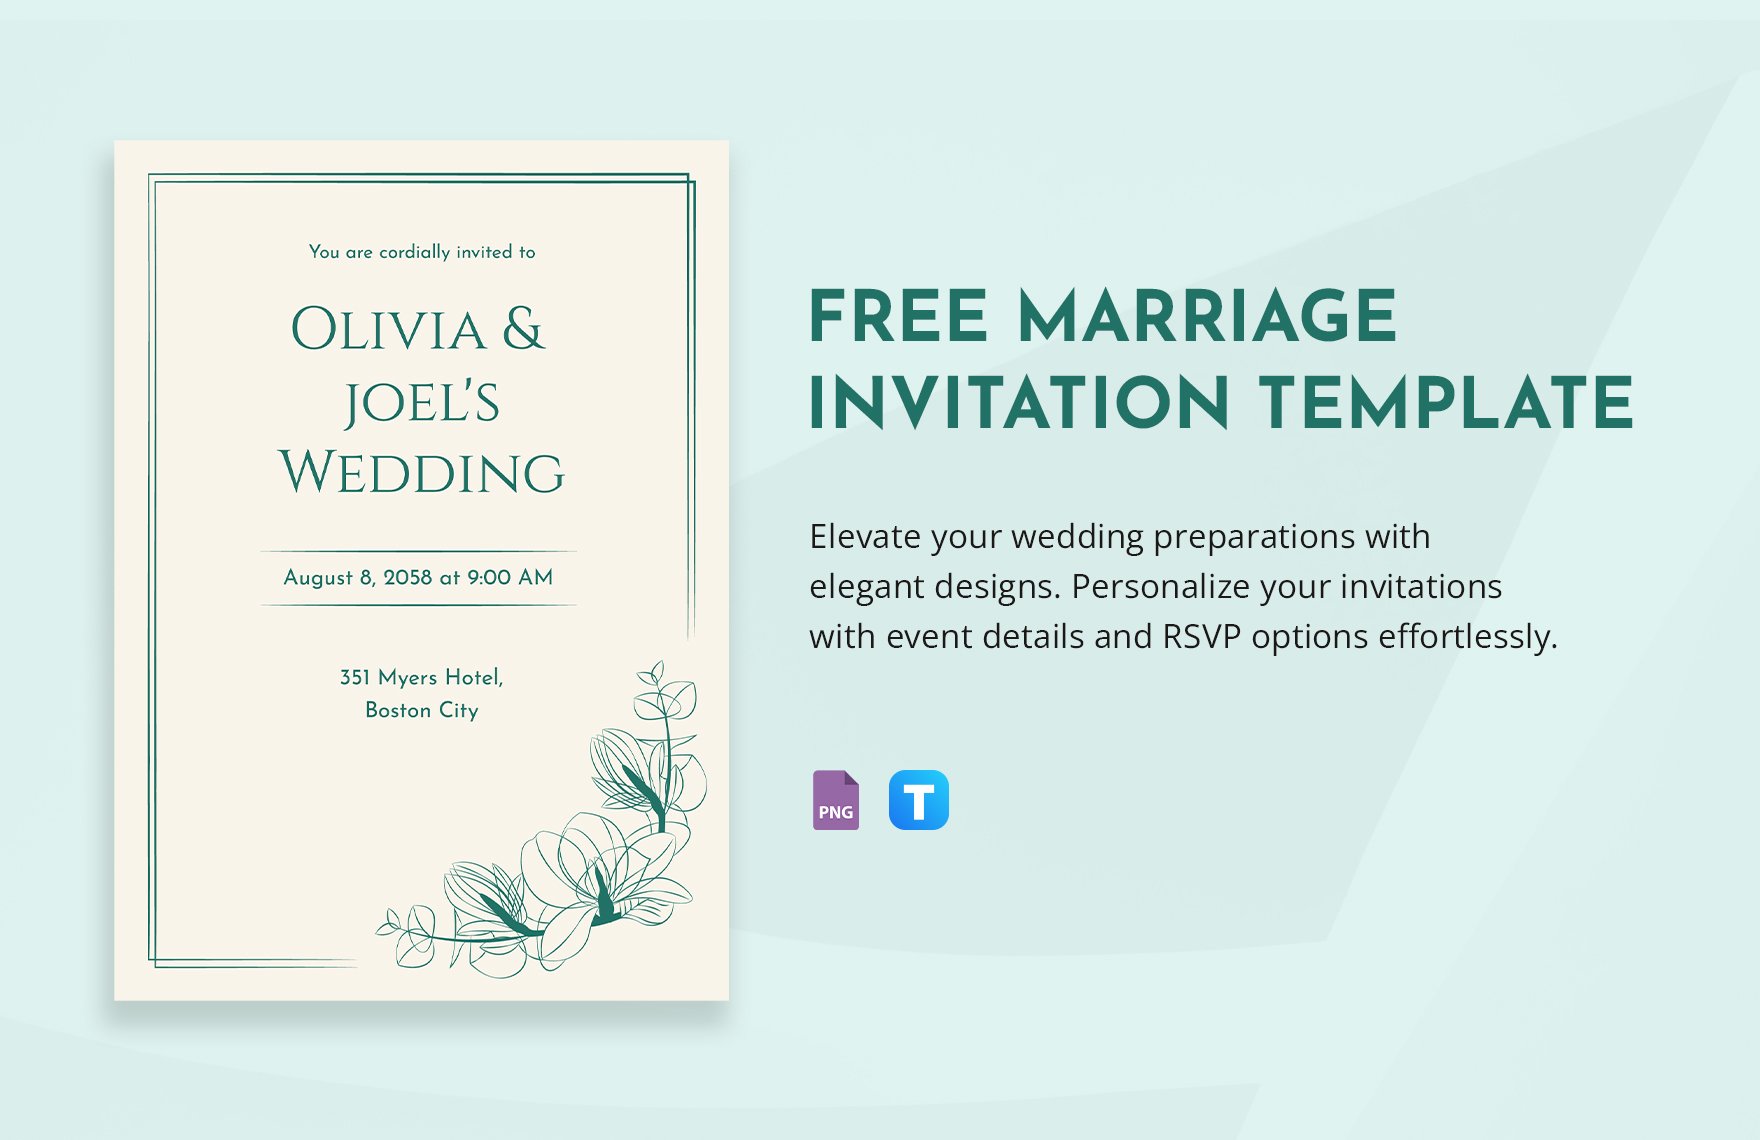 Free Marriage Invitation Template